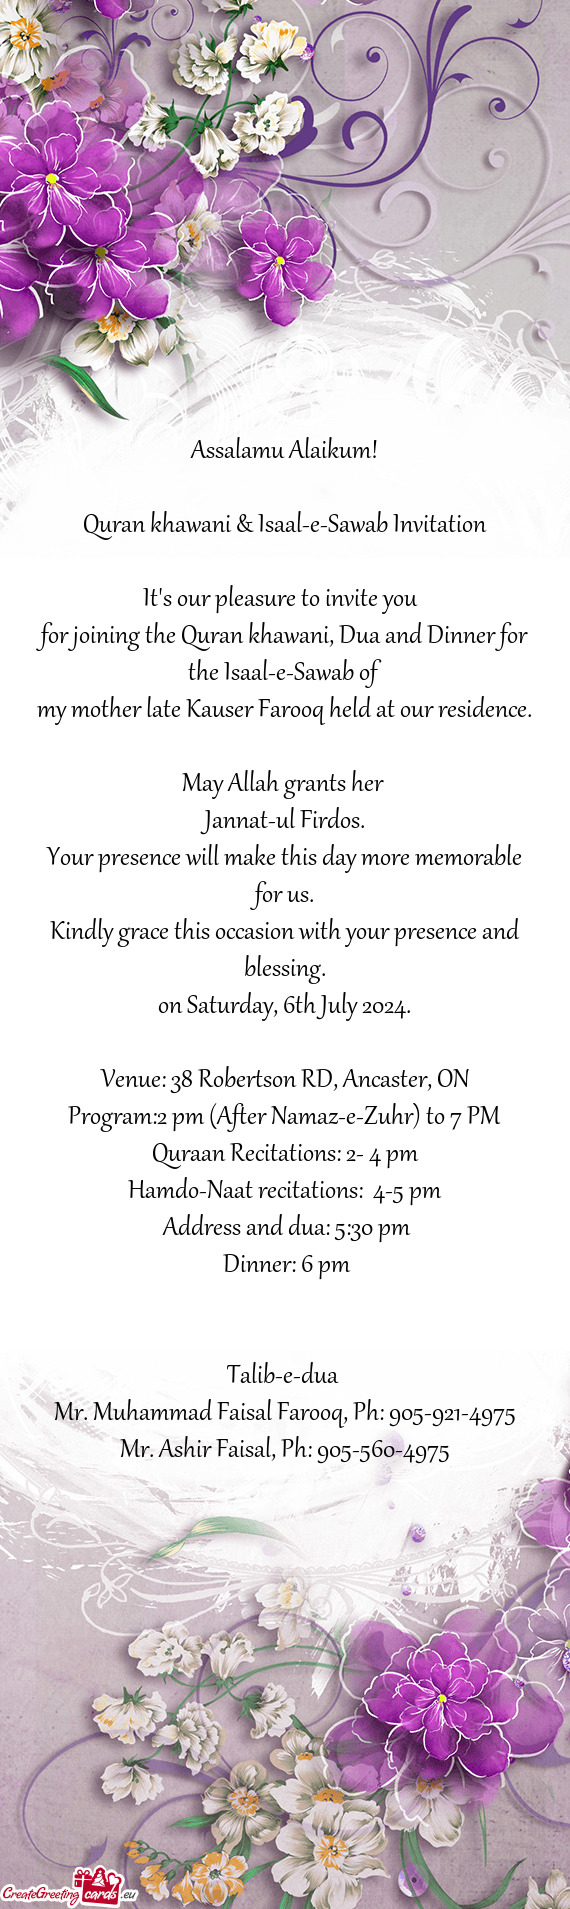 Quran khawani & Isaal-e-Sawab Invitation